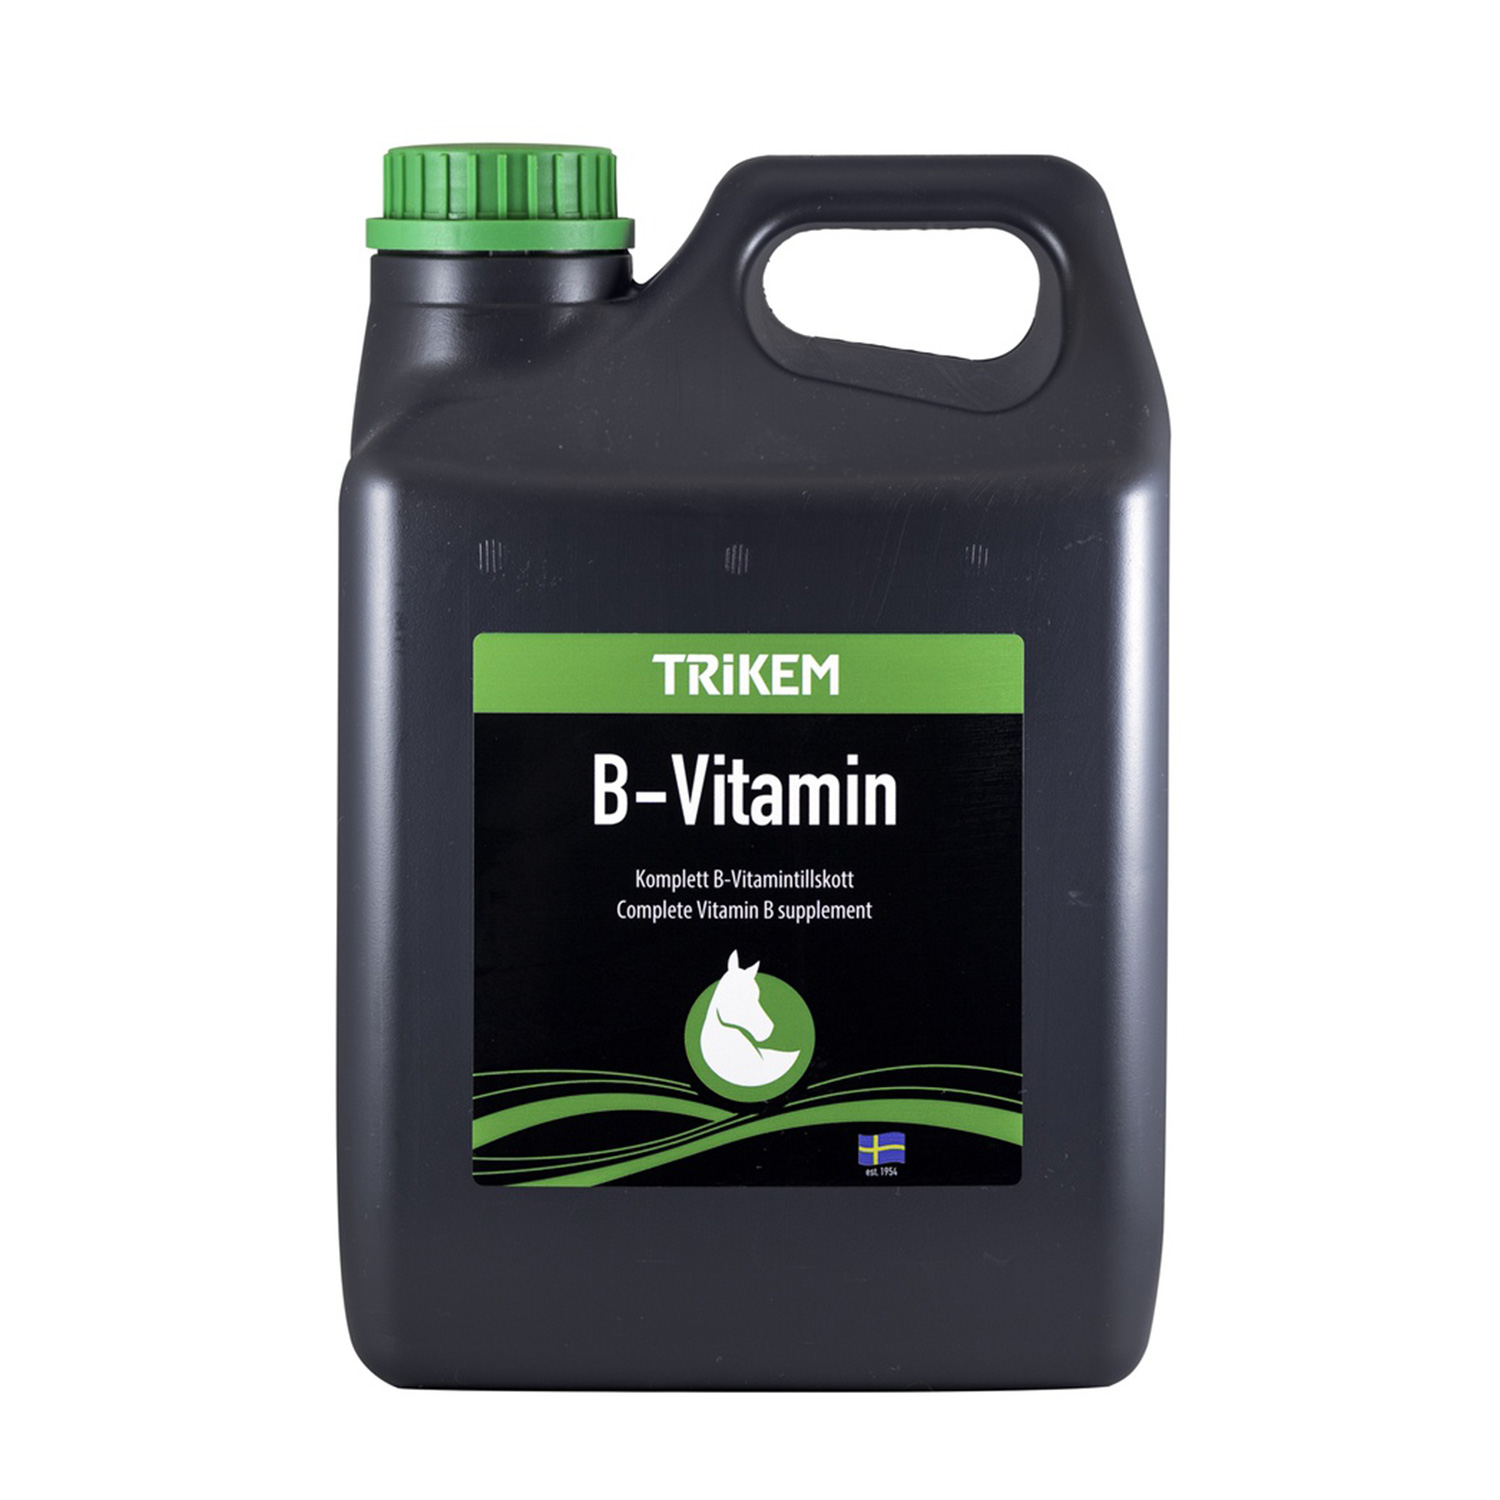 Vimital b-vitamin 2,5 liter